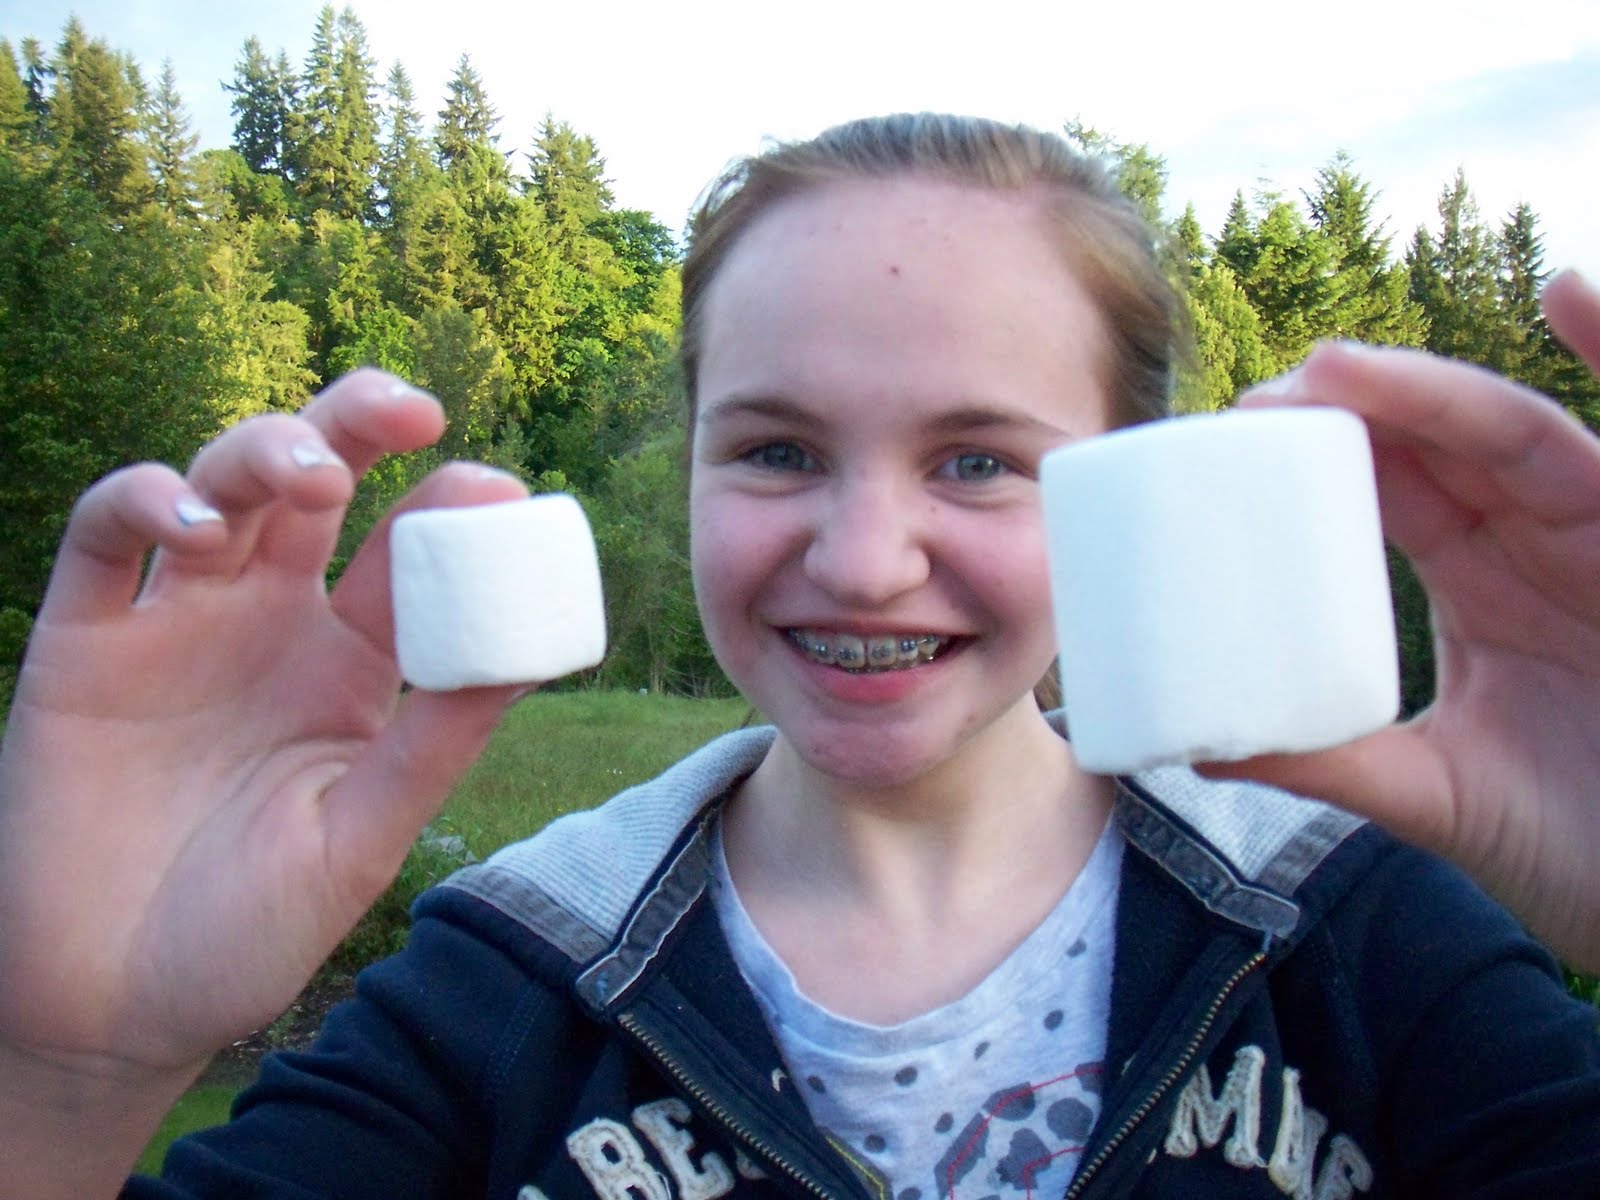 regular marshmallow vs giant marshmallow}